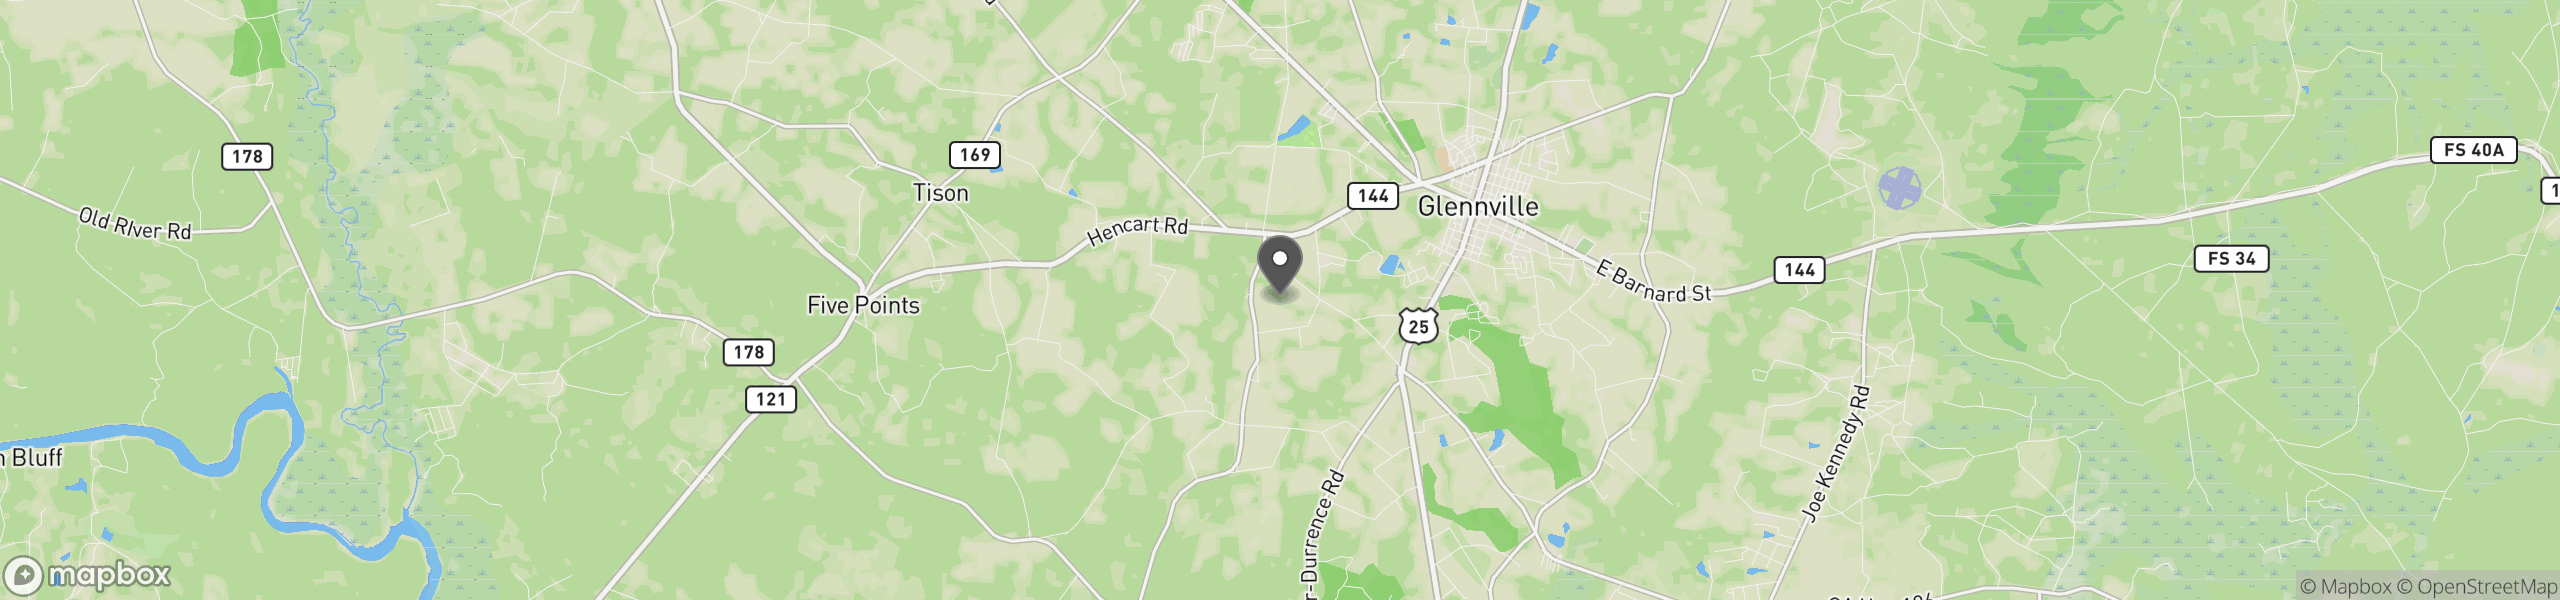 Glennville, GA